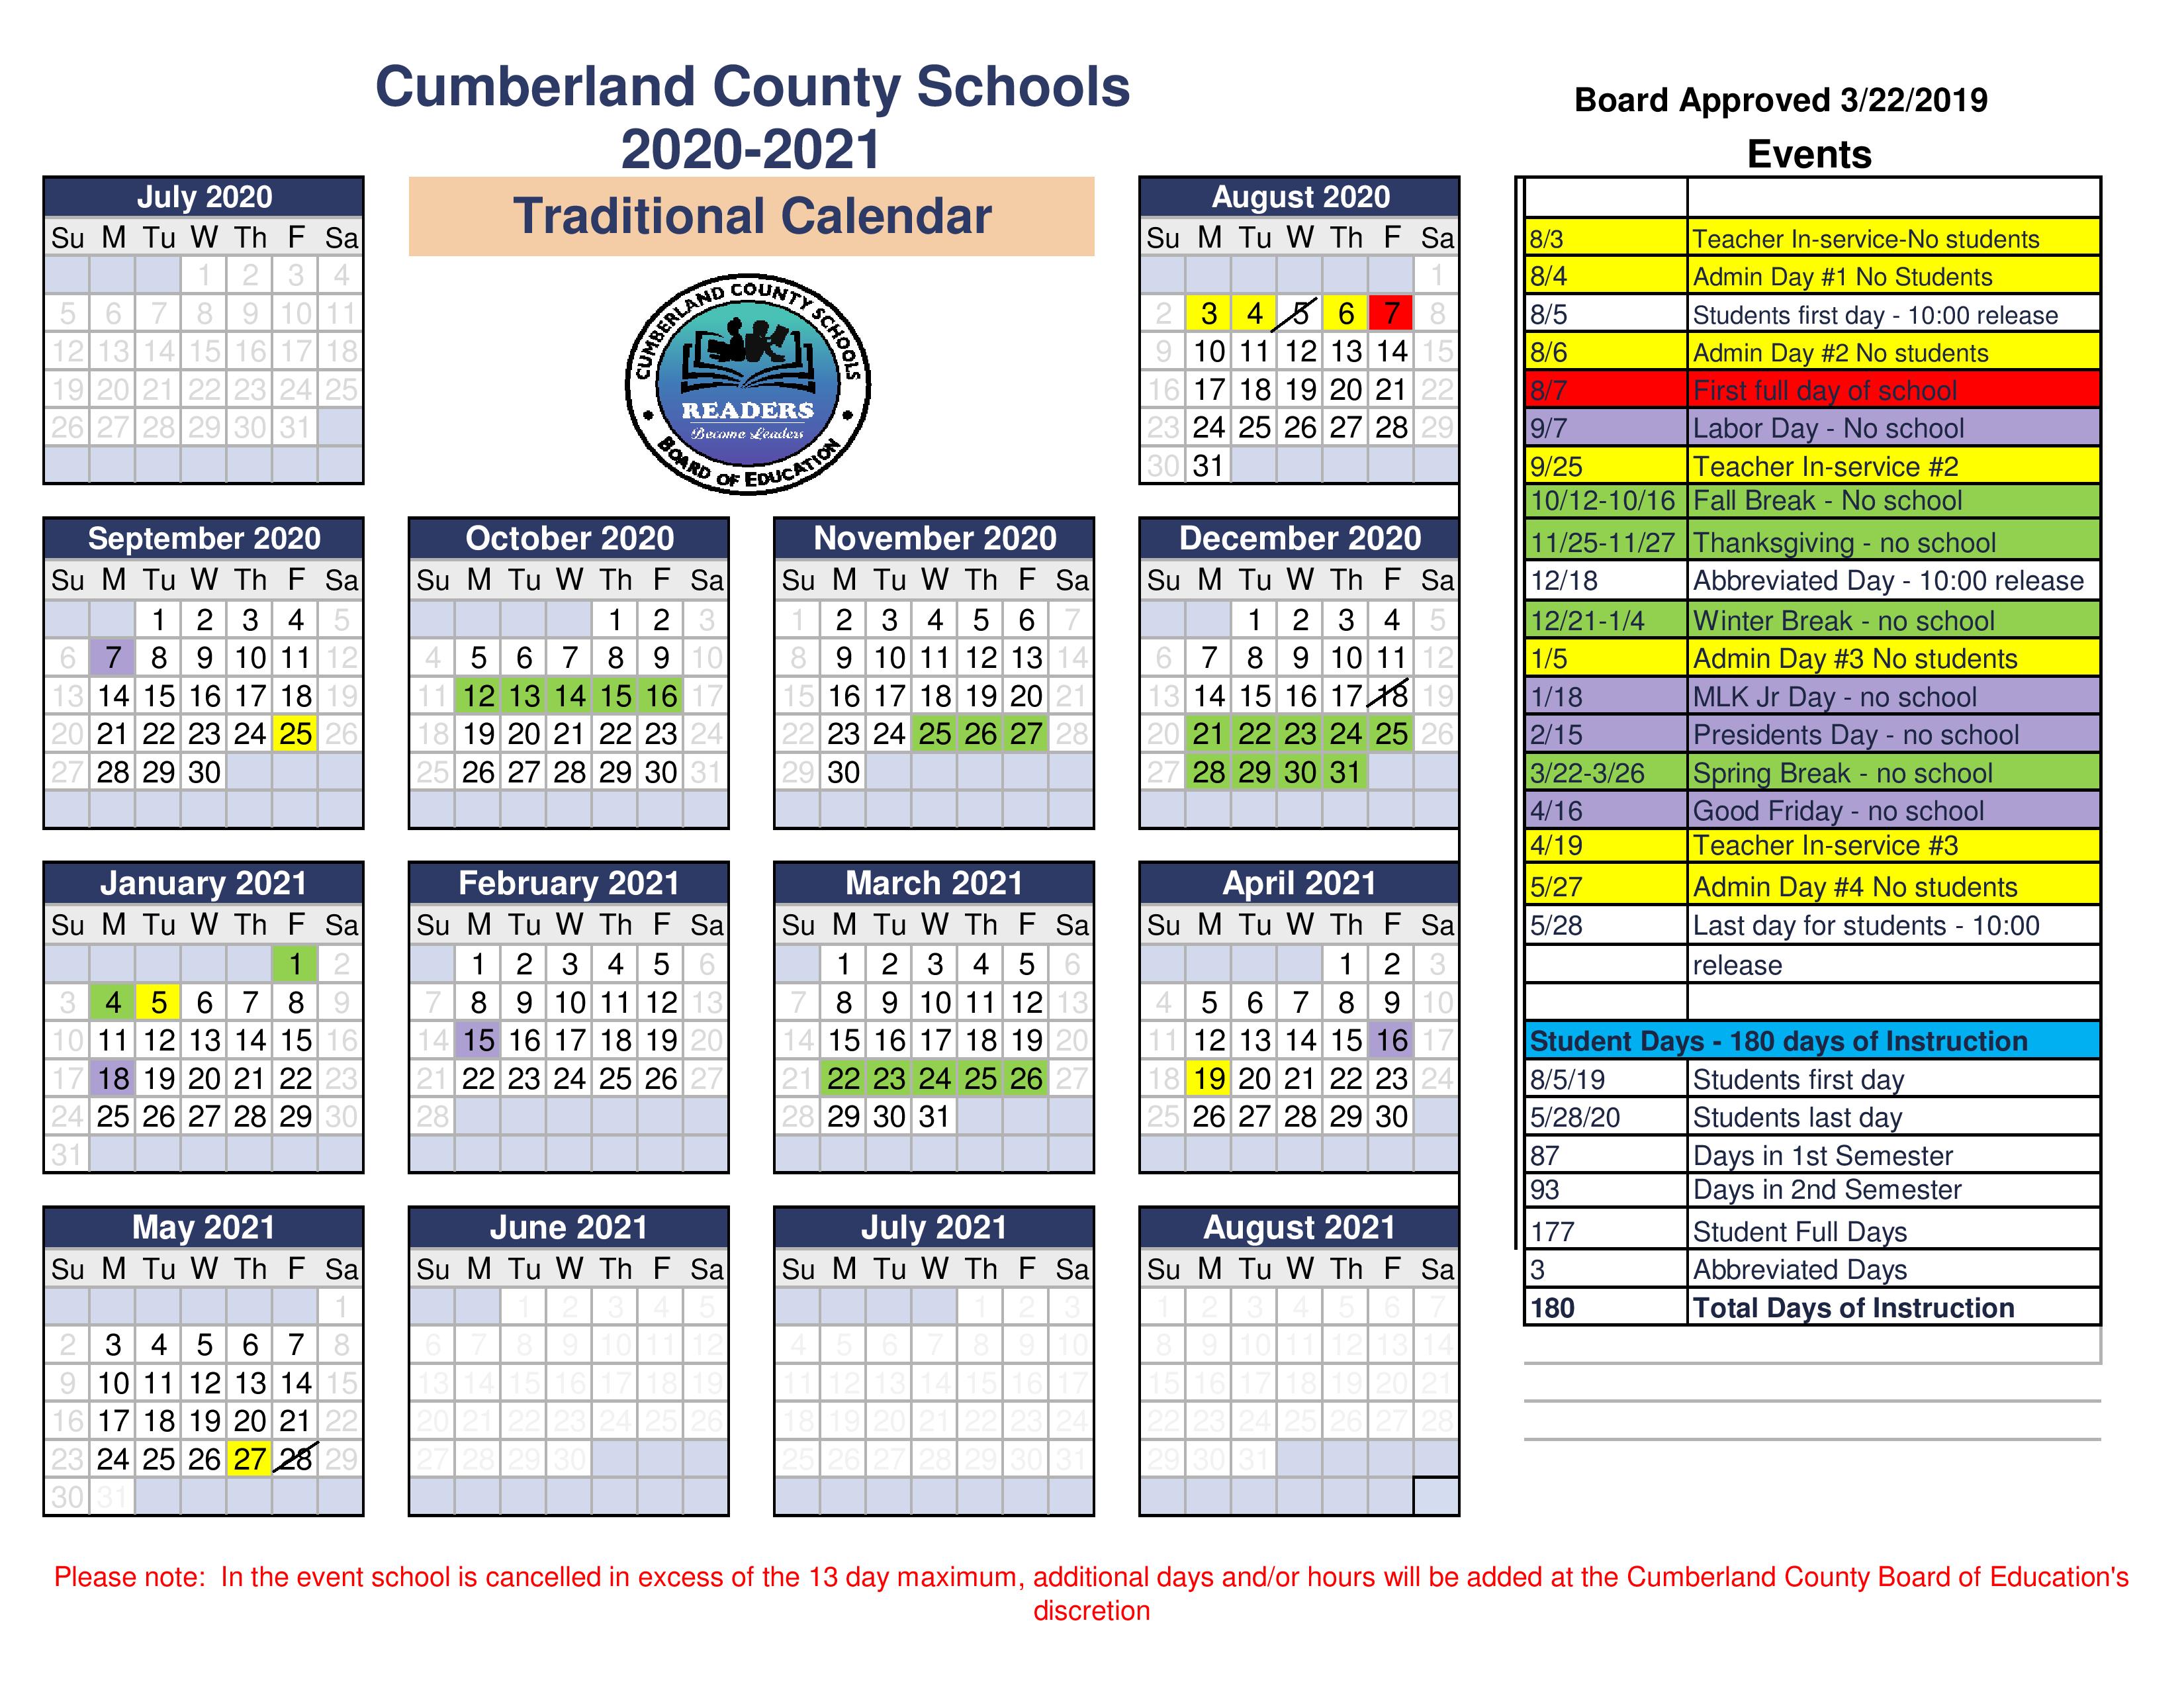 hamilton township nj school district calendar 2020